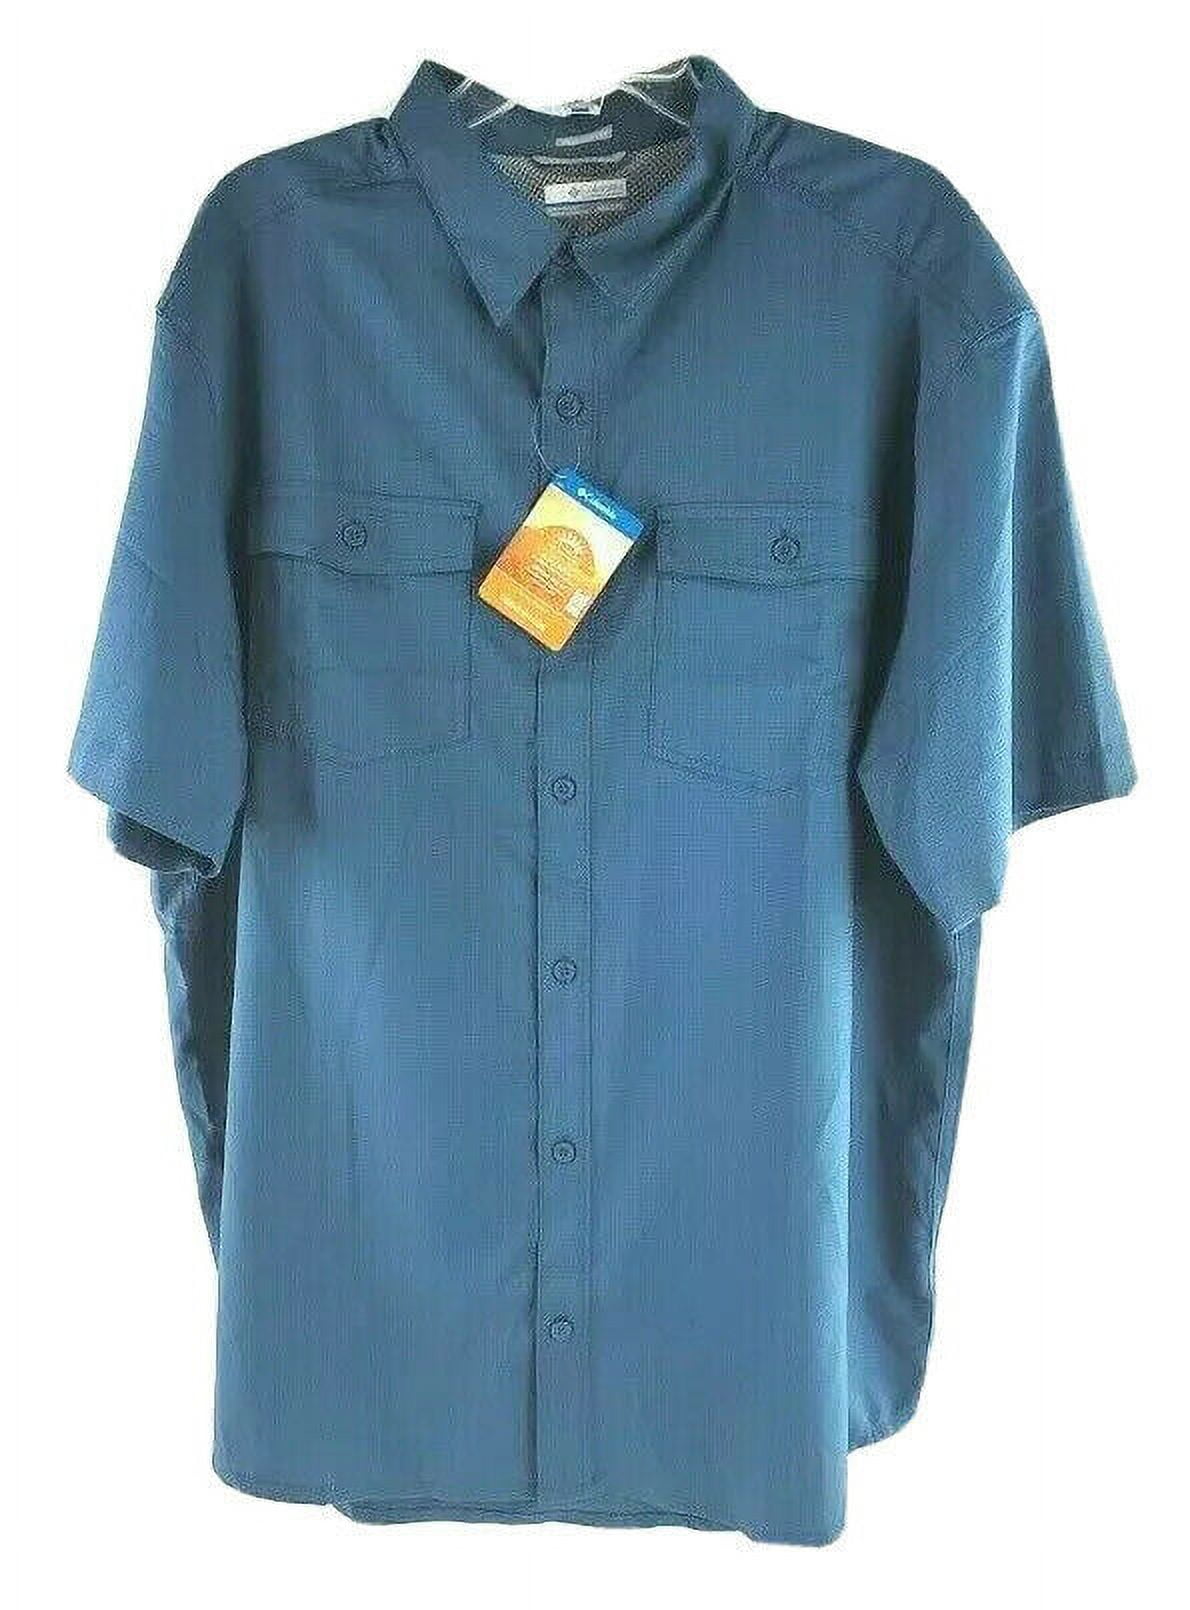 Columbia Men's Omni-Shade SPF 40 Short Sleeve Fishing Shirt, Blue, XL - NEW  